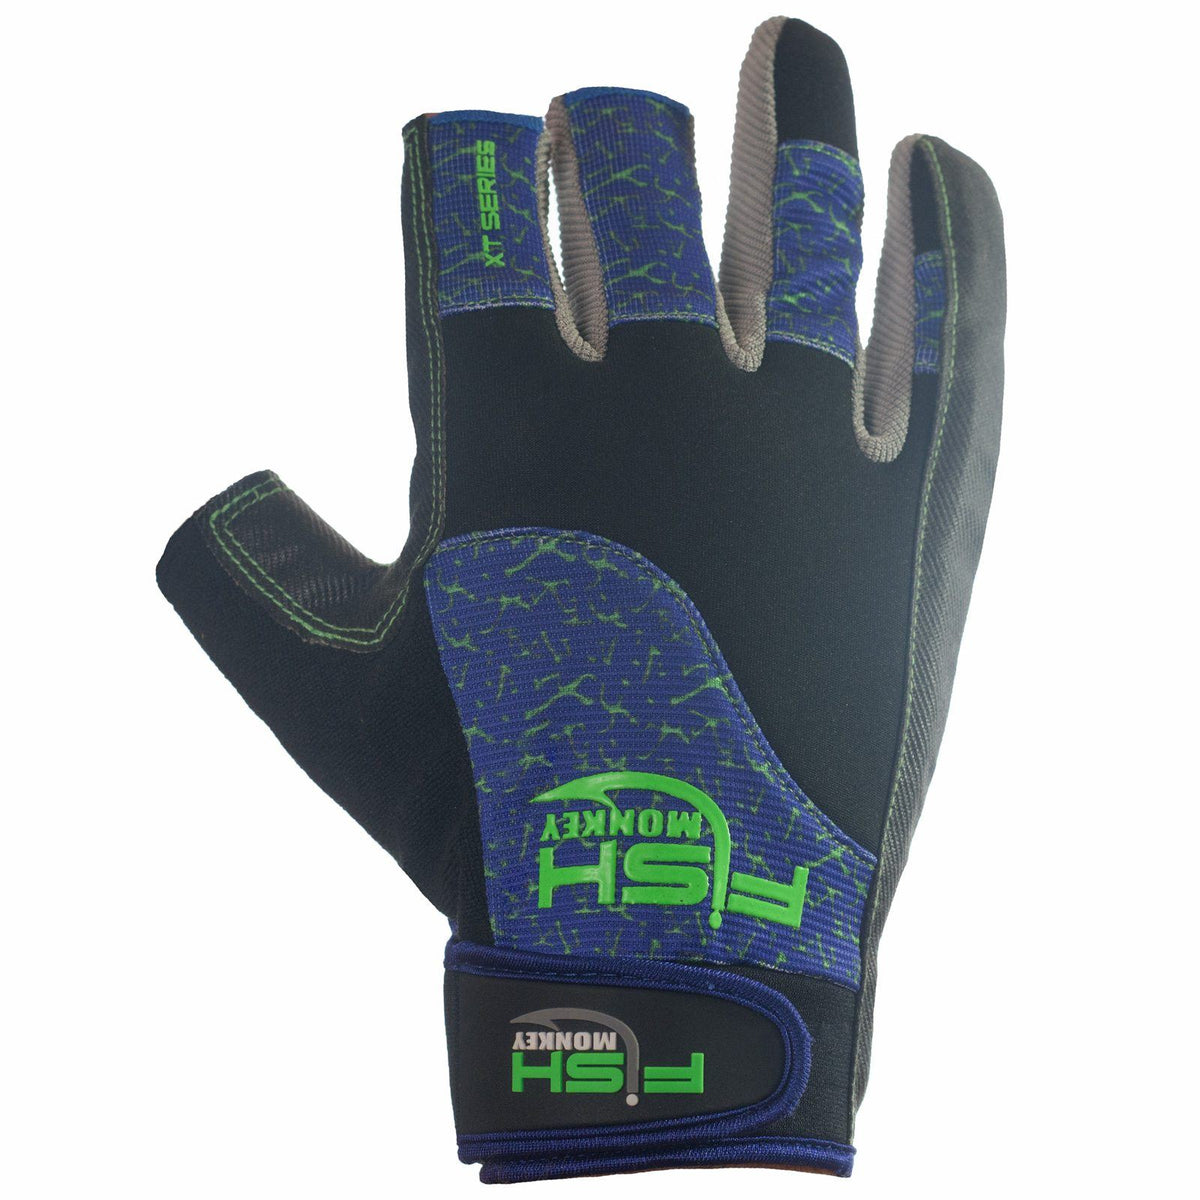 Fish Monkey Gloves The Crusher Gloves, Medium, Blue Water Camo